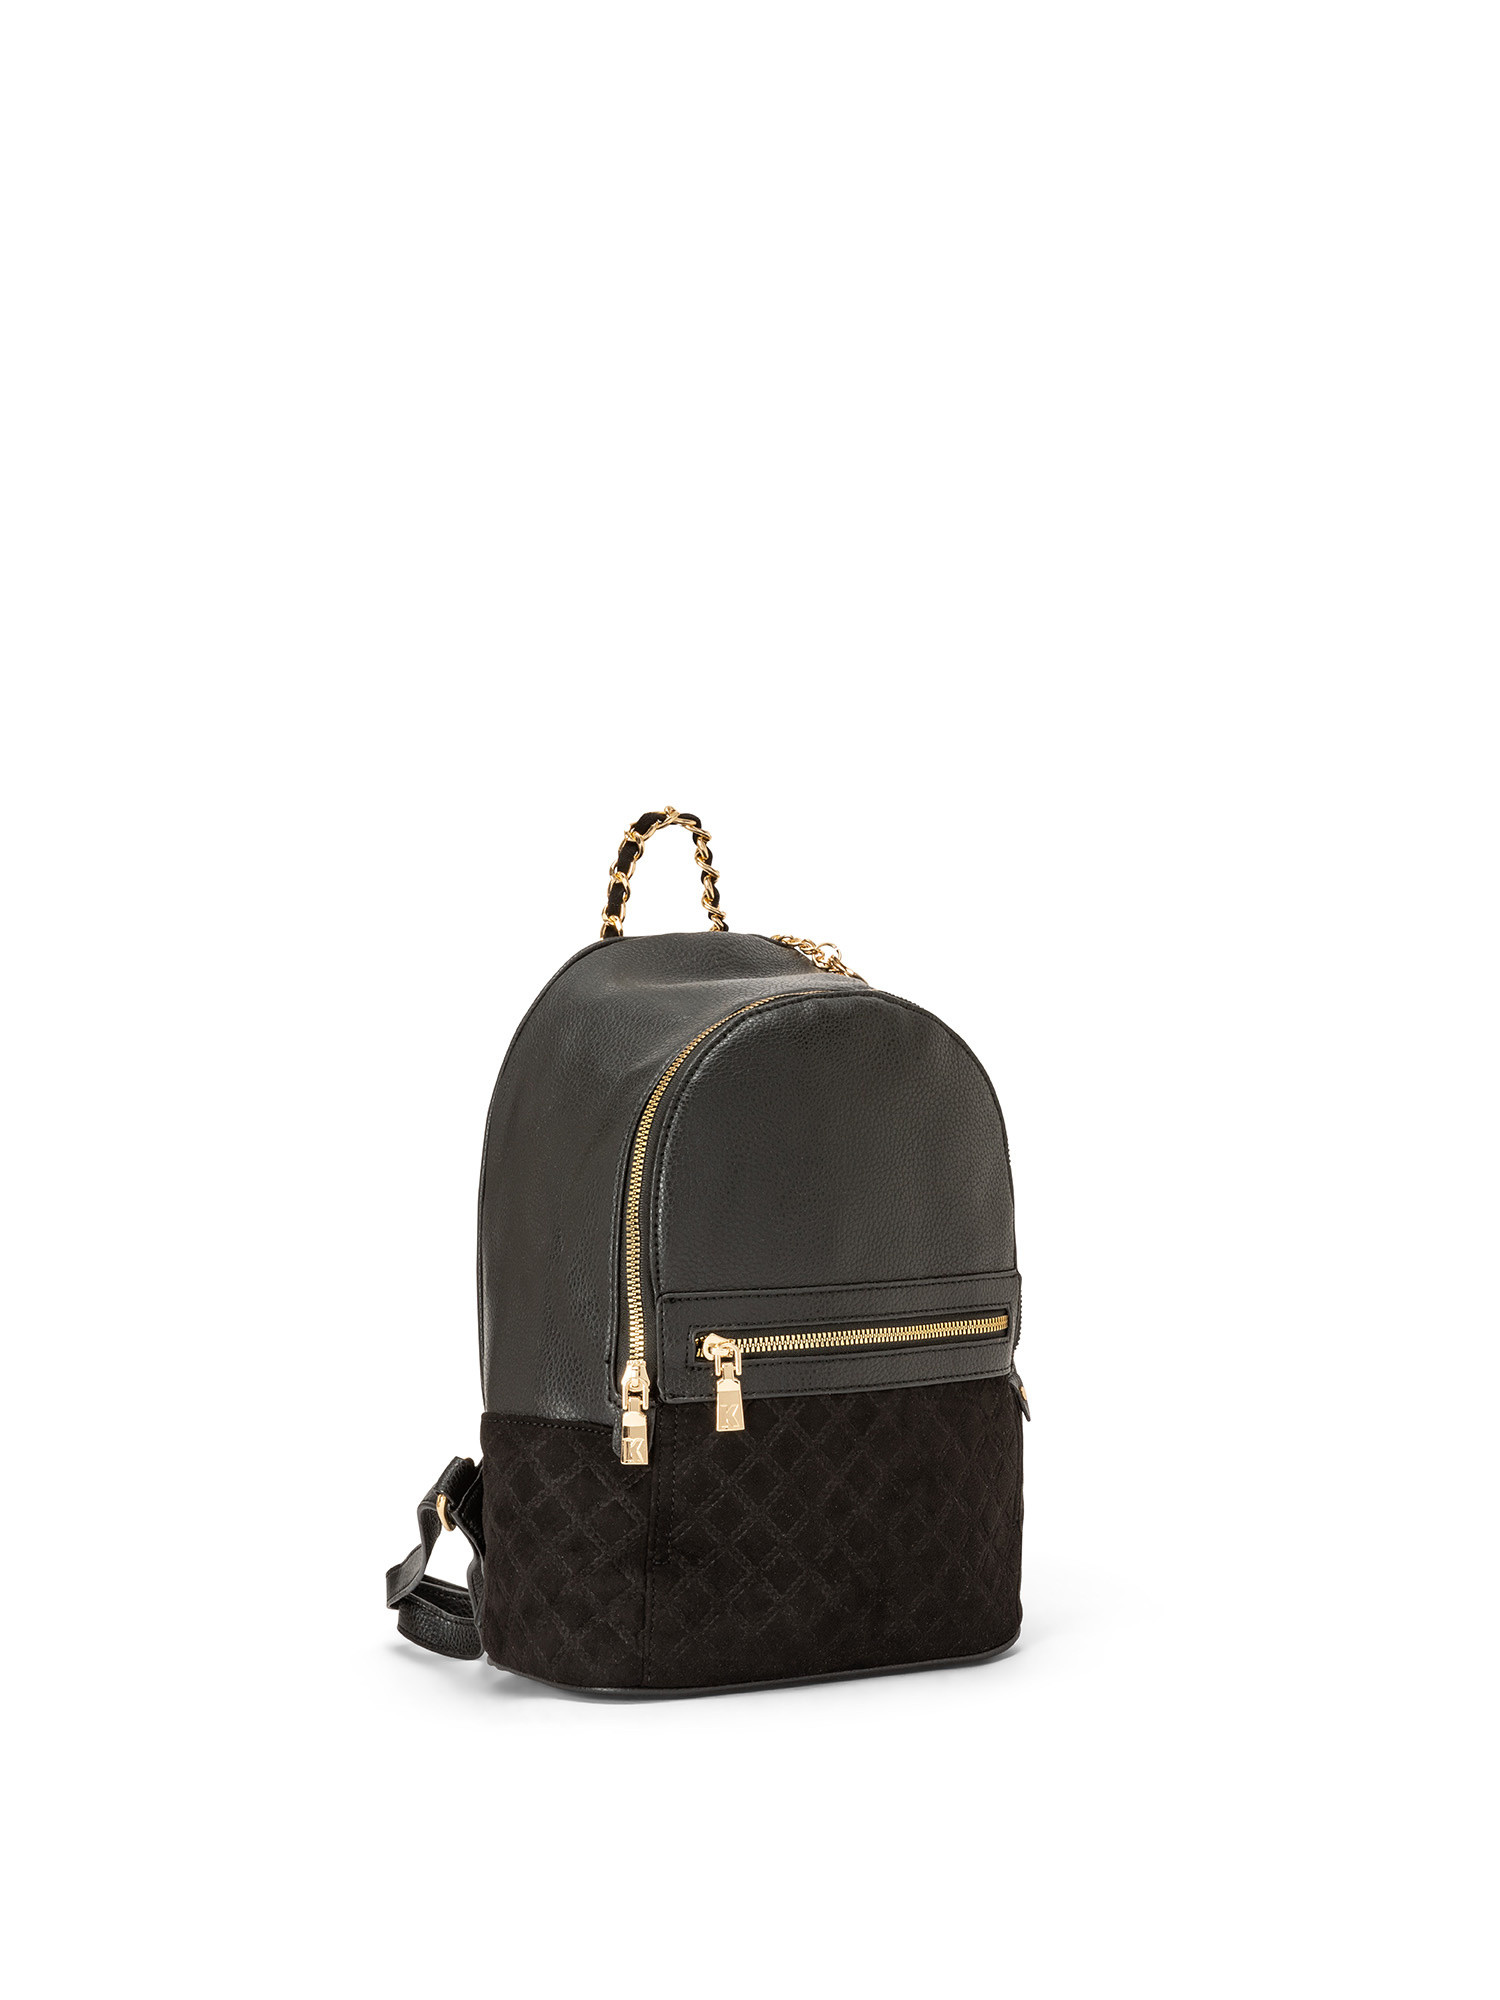 Koan - Backpack with print, Black, large image number 1